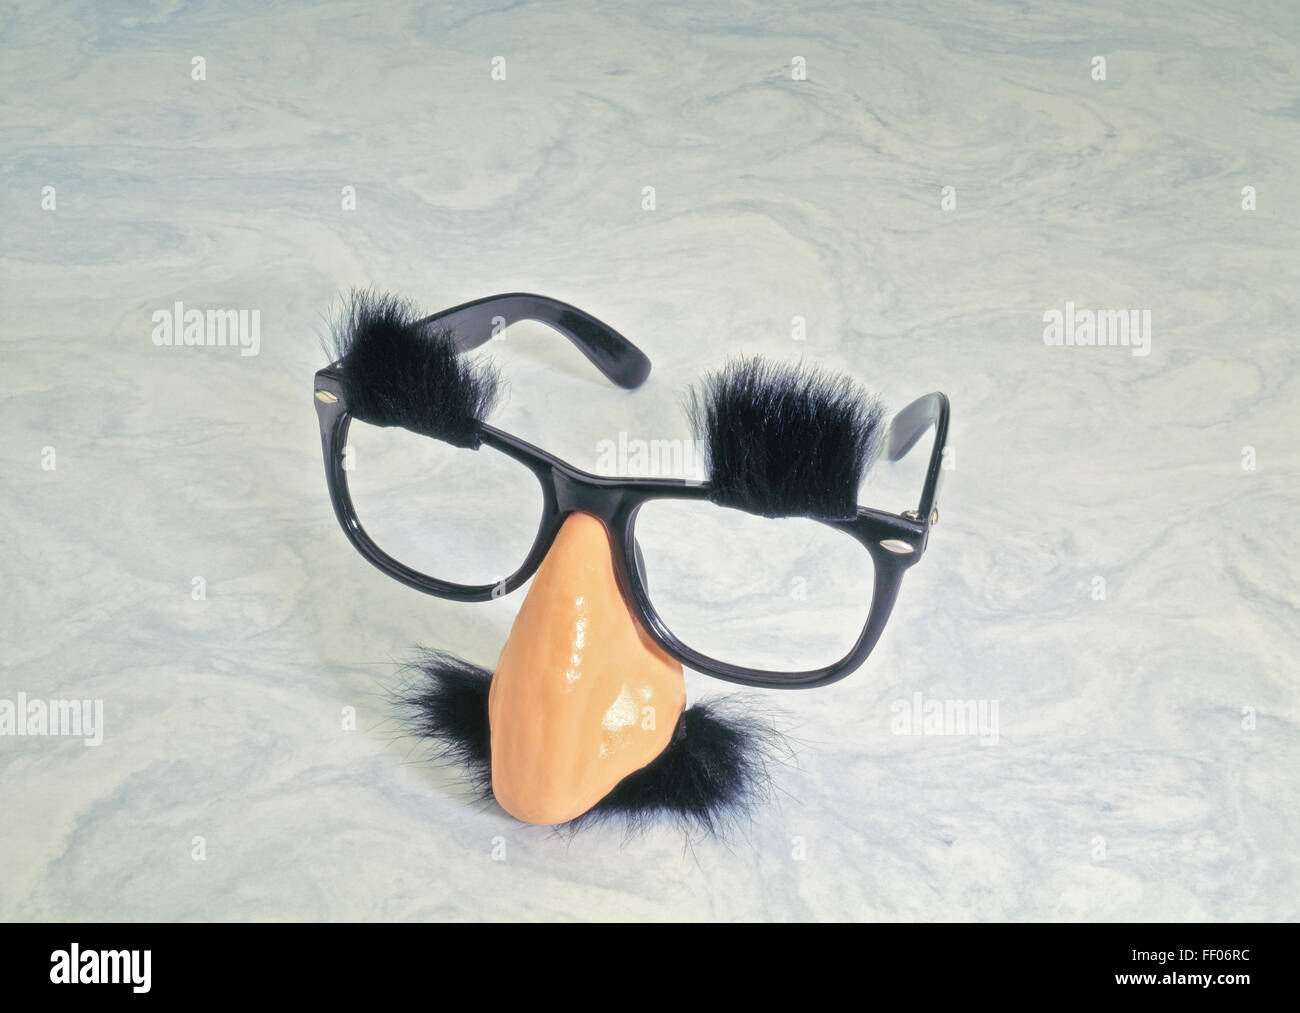 Comedy nose, mustache, and glasses Stock Photo